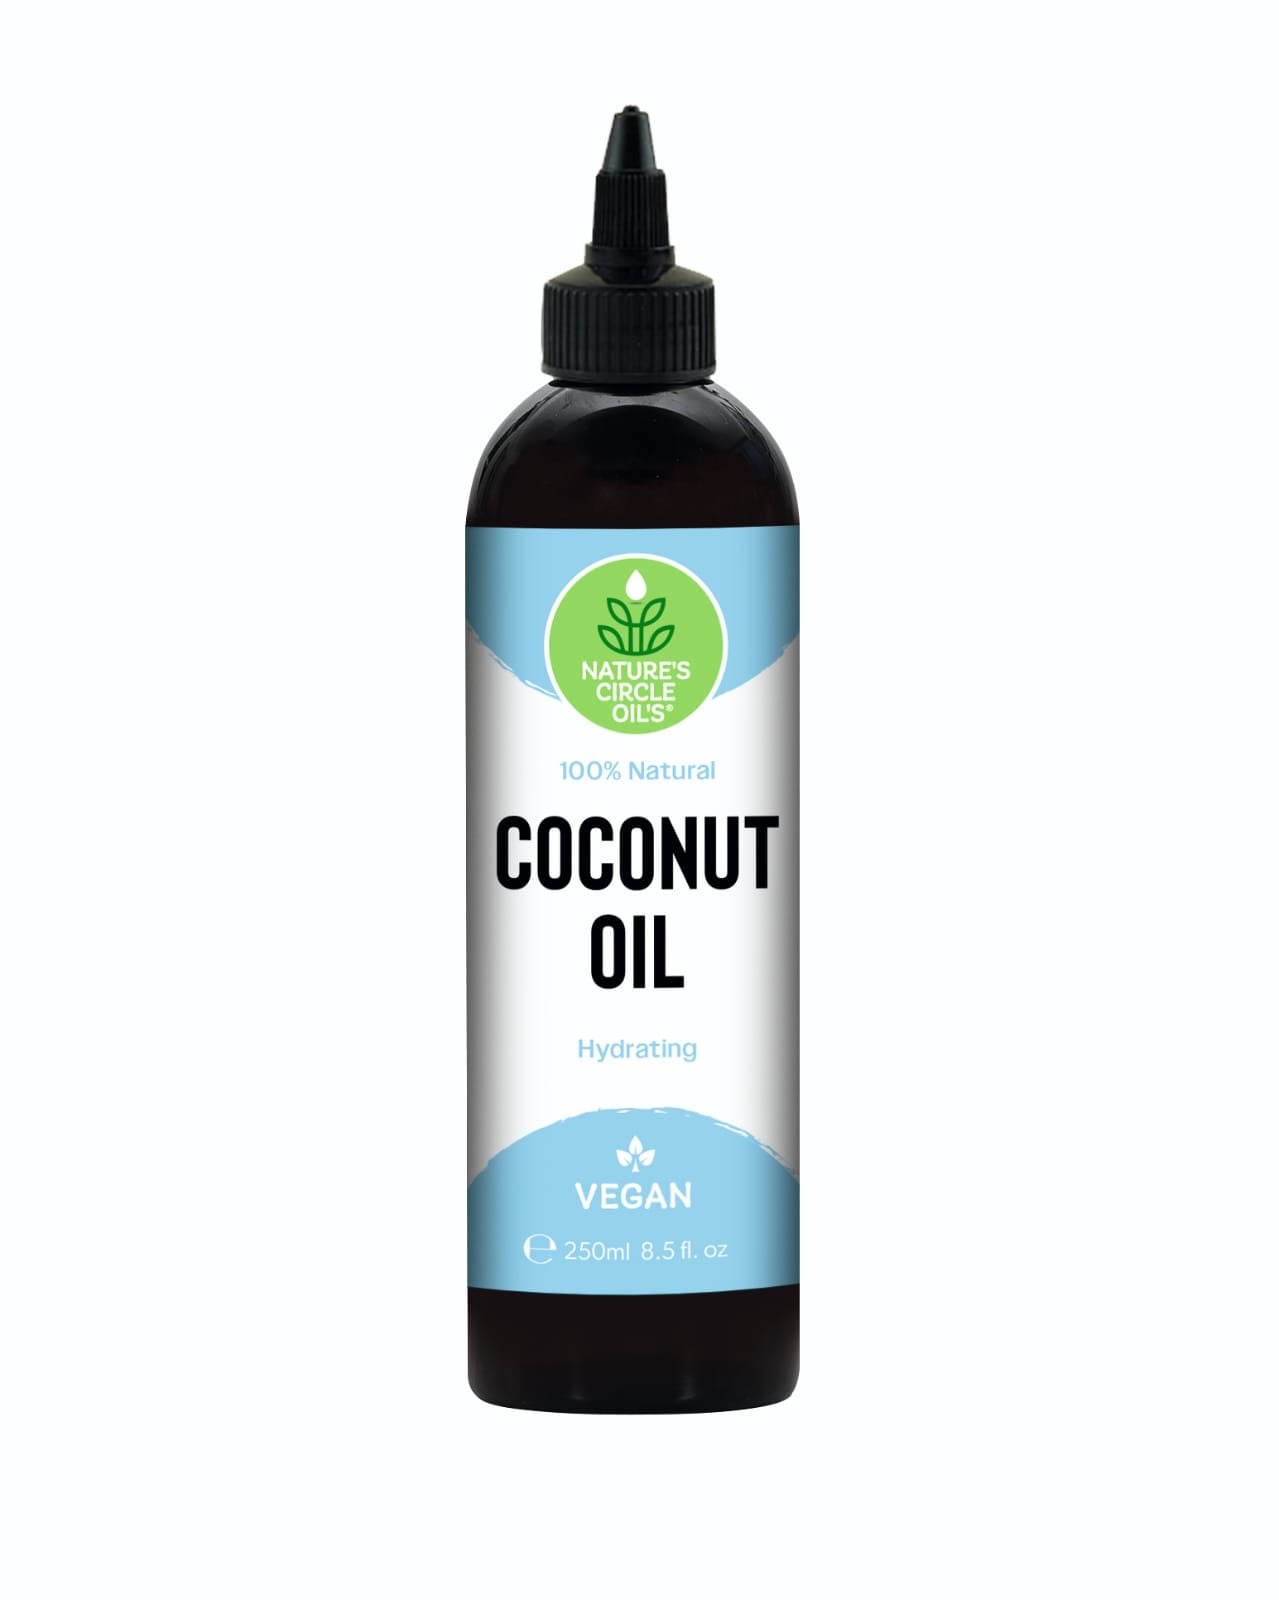 Natures Cirlce Oils Coconut oil 250ml / 8.5oz